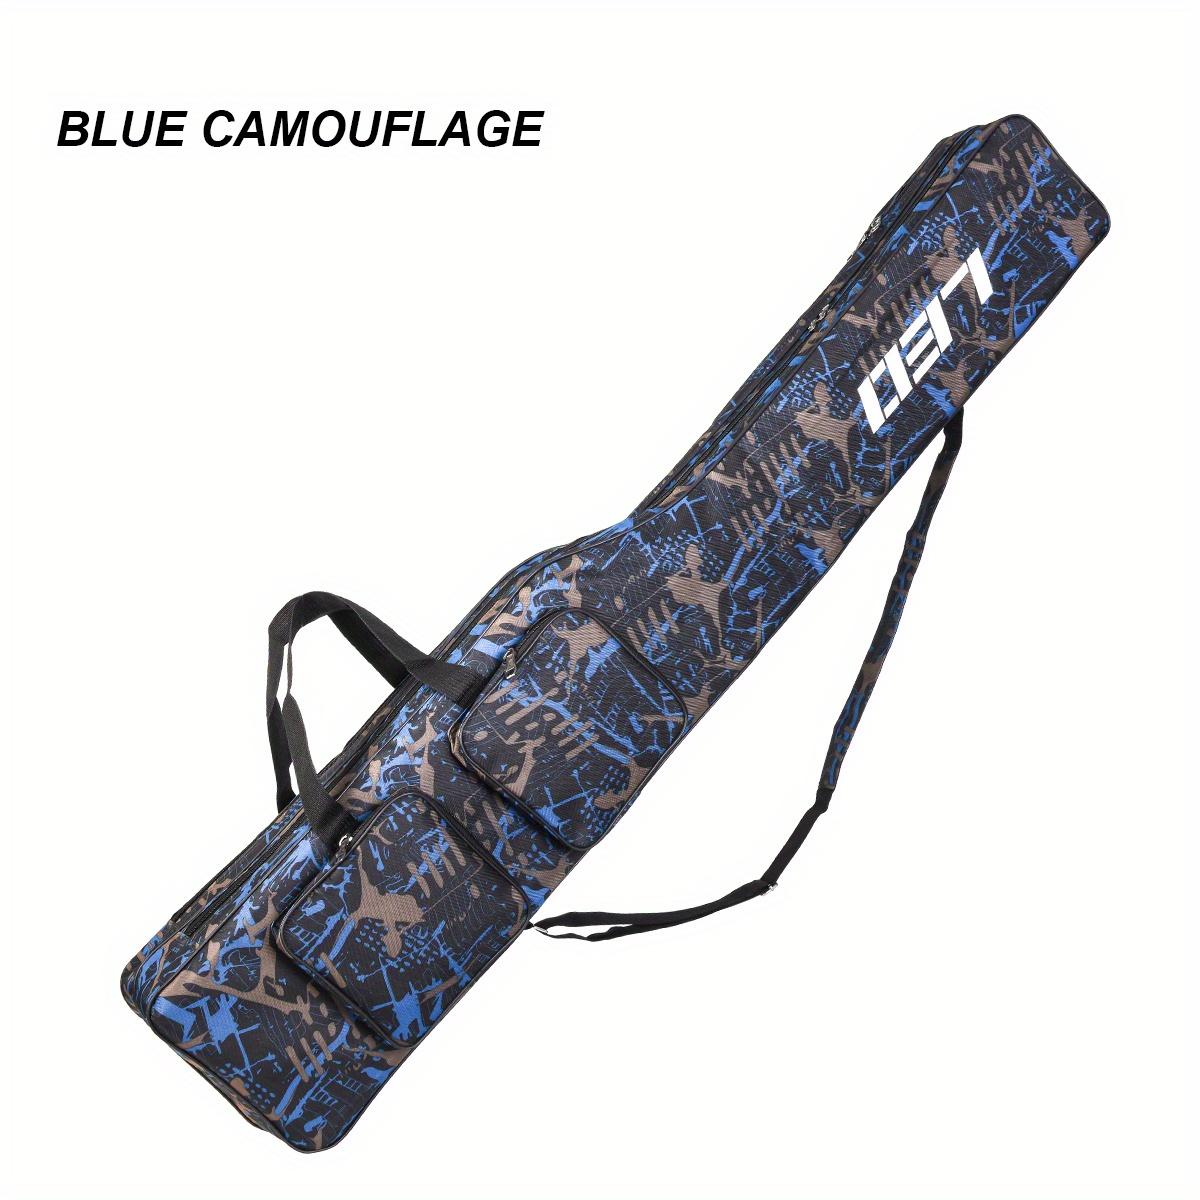 Leo Fishing Multi-Purpose Fishing Travel Fishing Rod Reel Tackle Bag Shoulder Bag Luggage Bag